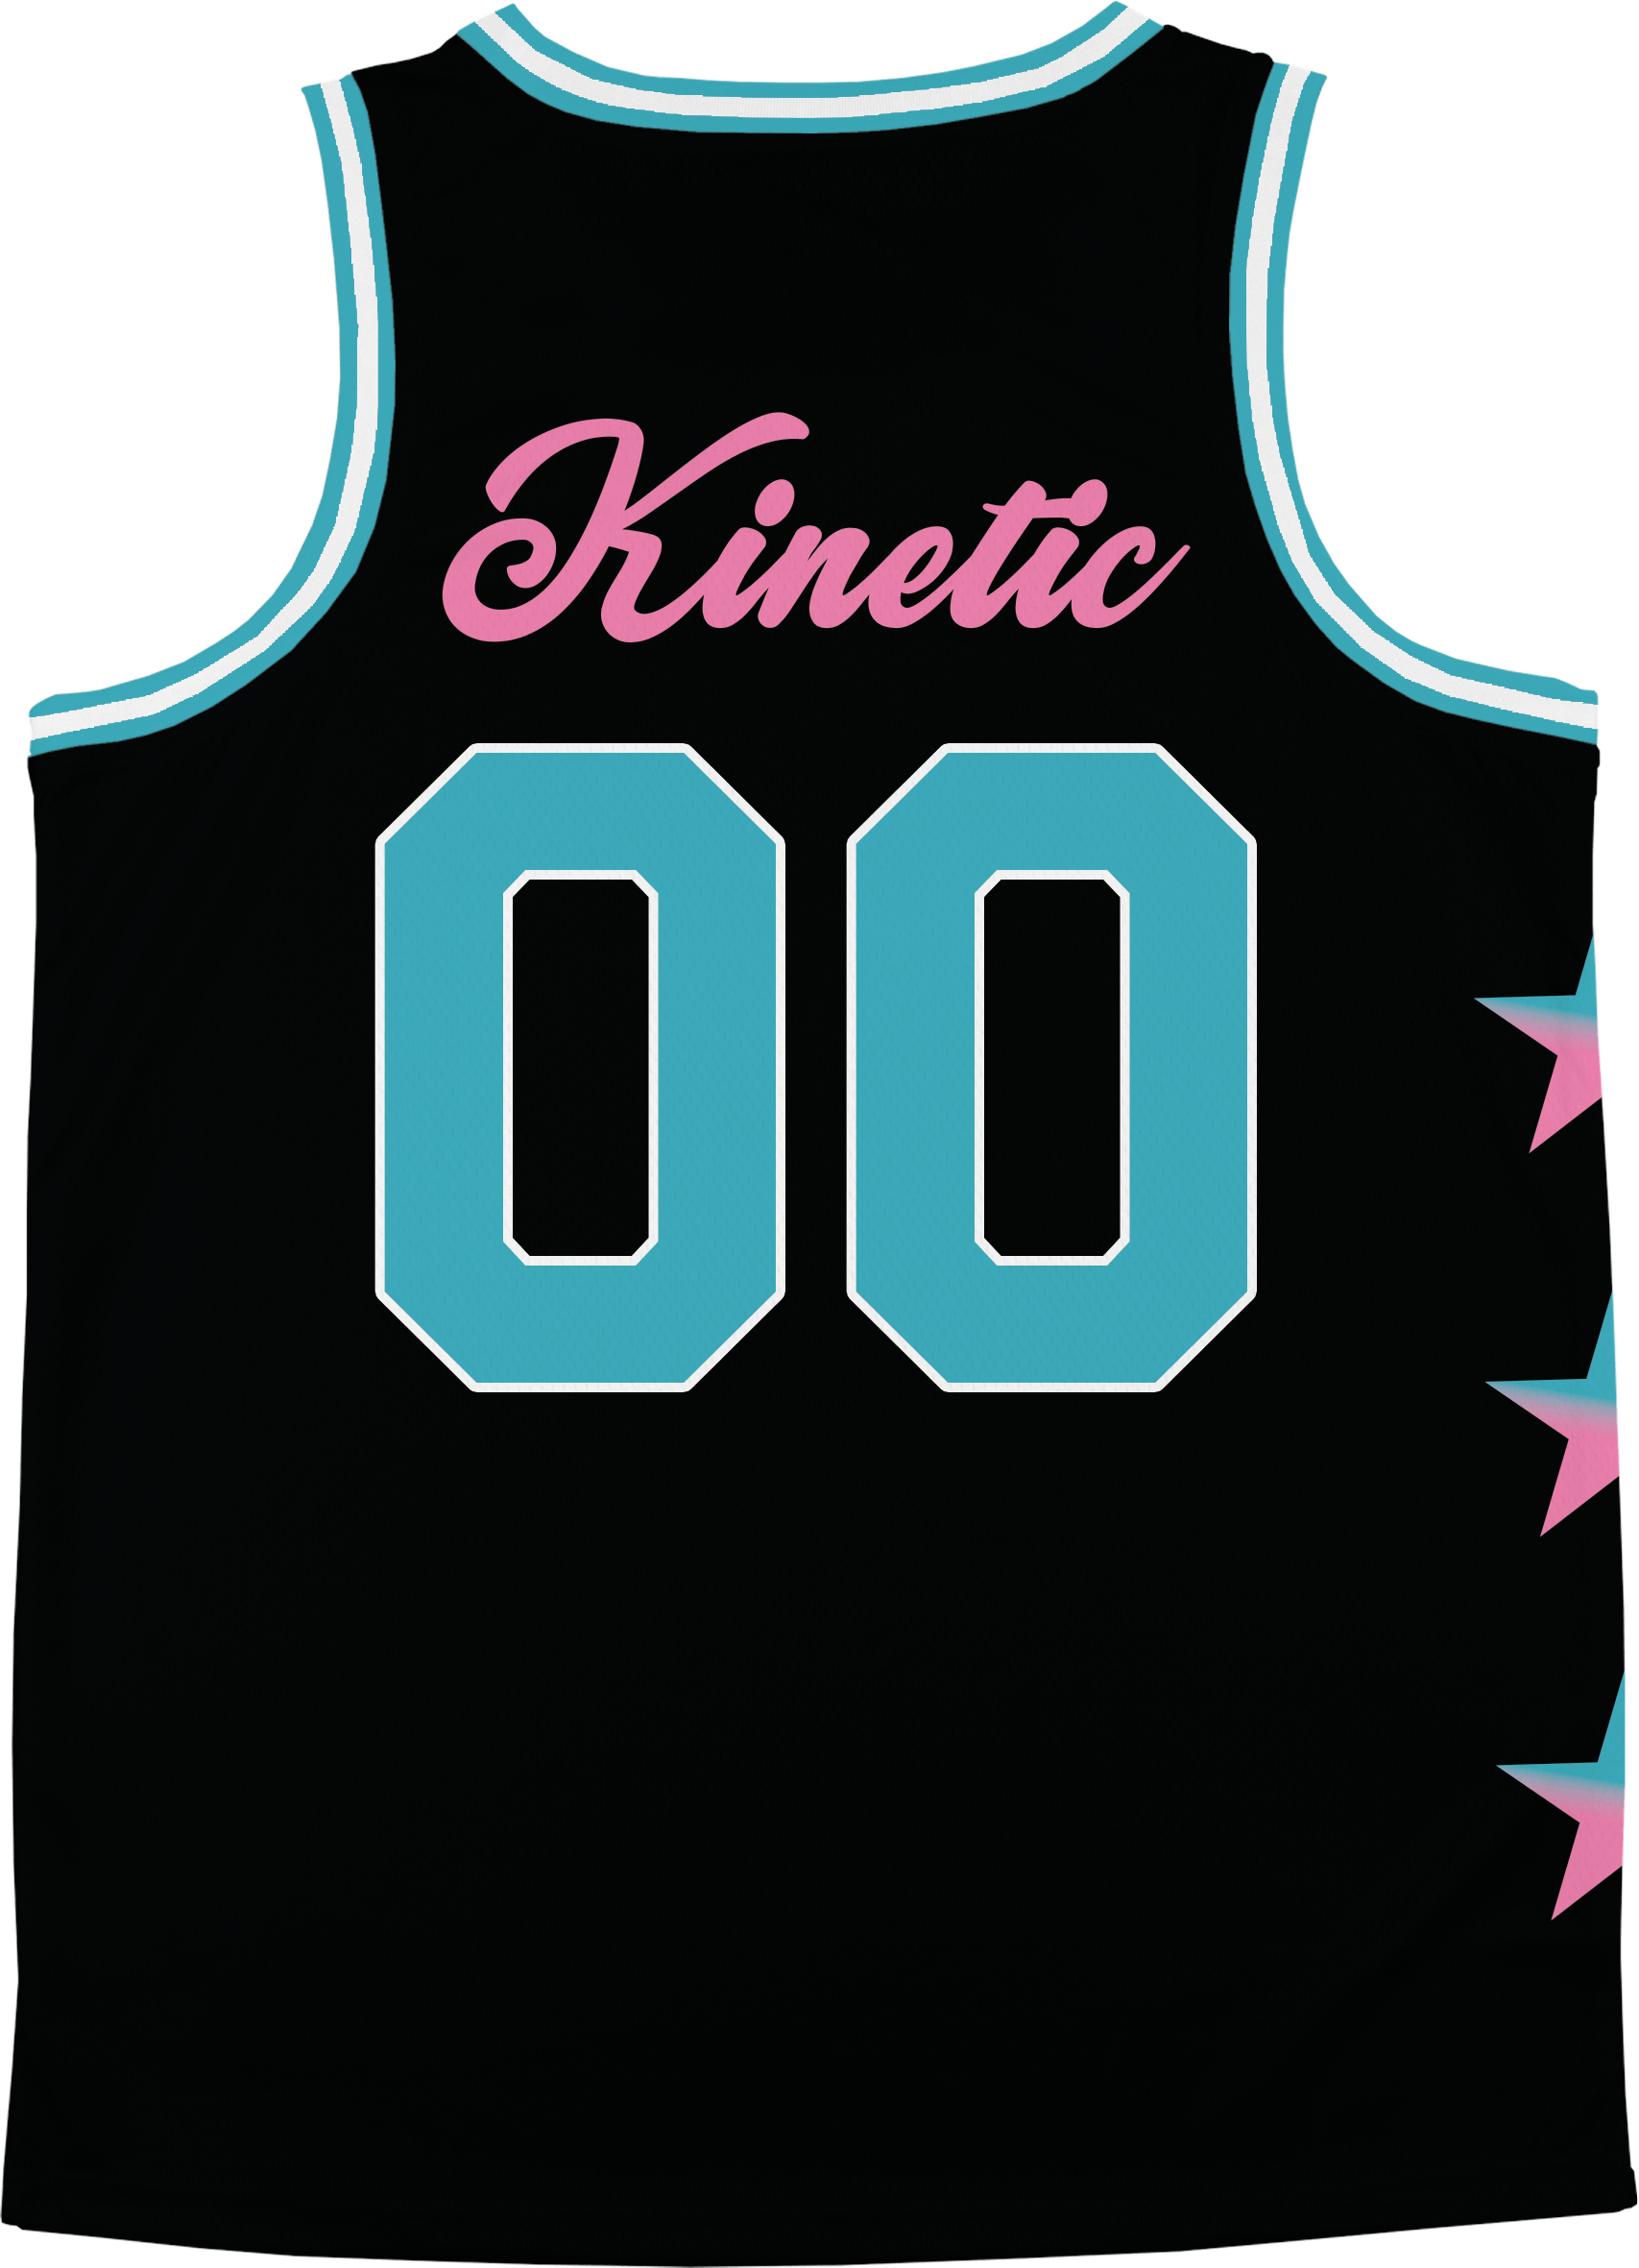 Alpha Gamma Rho - Cotton Candy Basketball Jersey - Kinetic Society